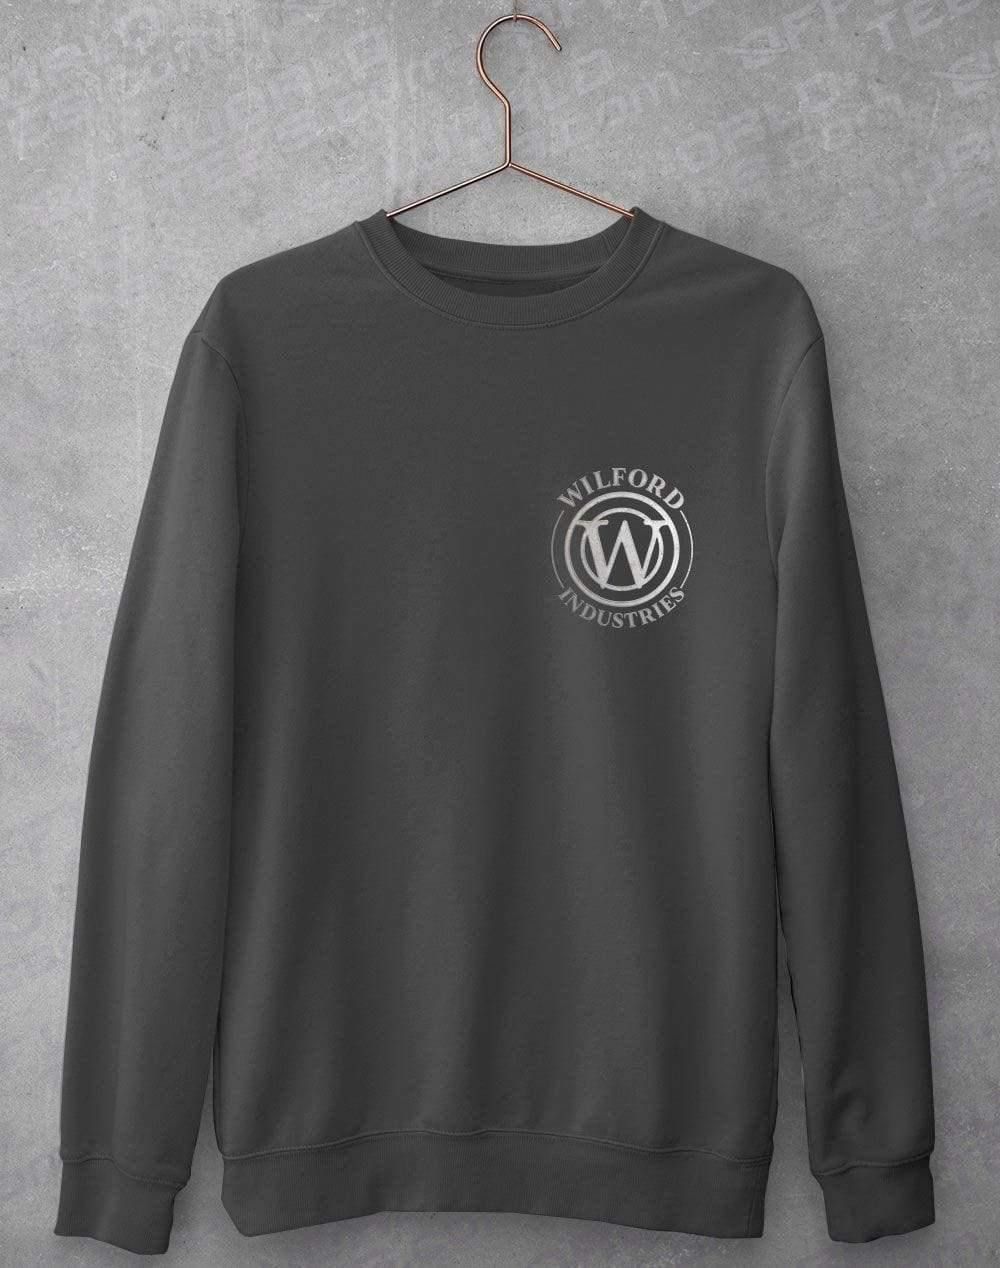 Wilford Industries Pocket Print Sweatshirt S / Charcoal  - Off World Tees